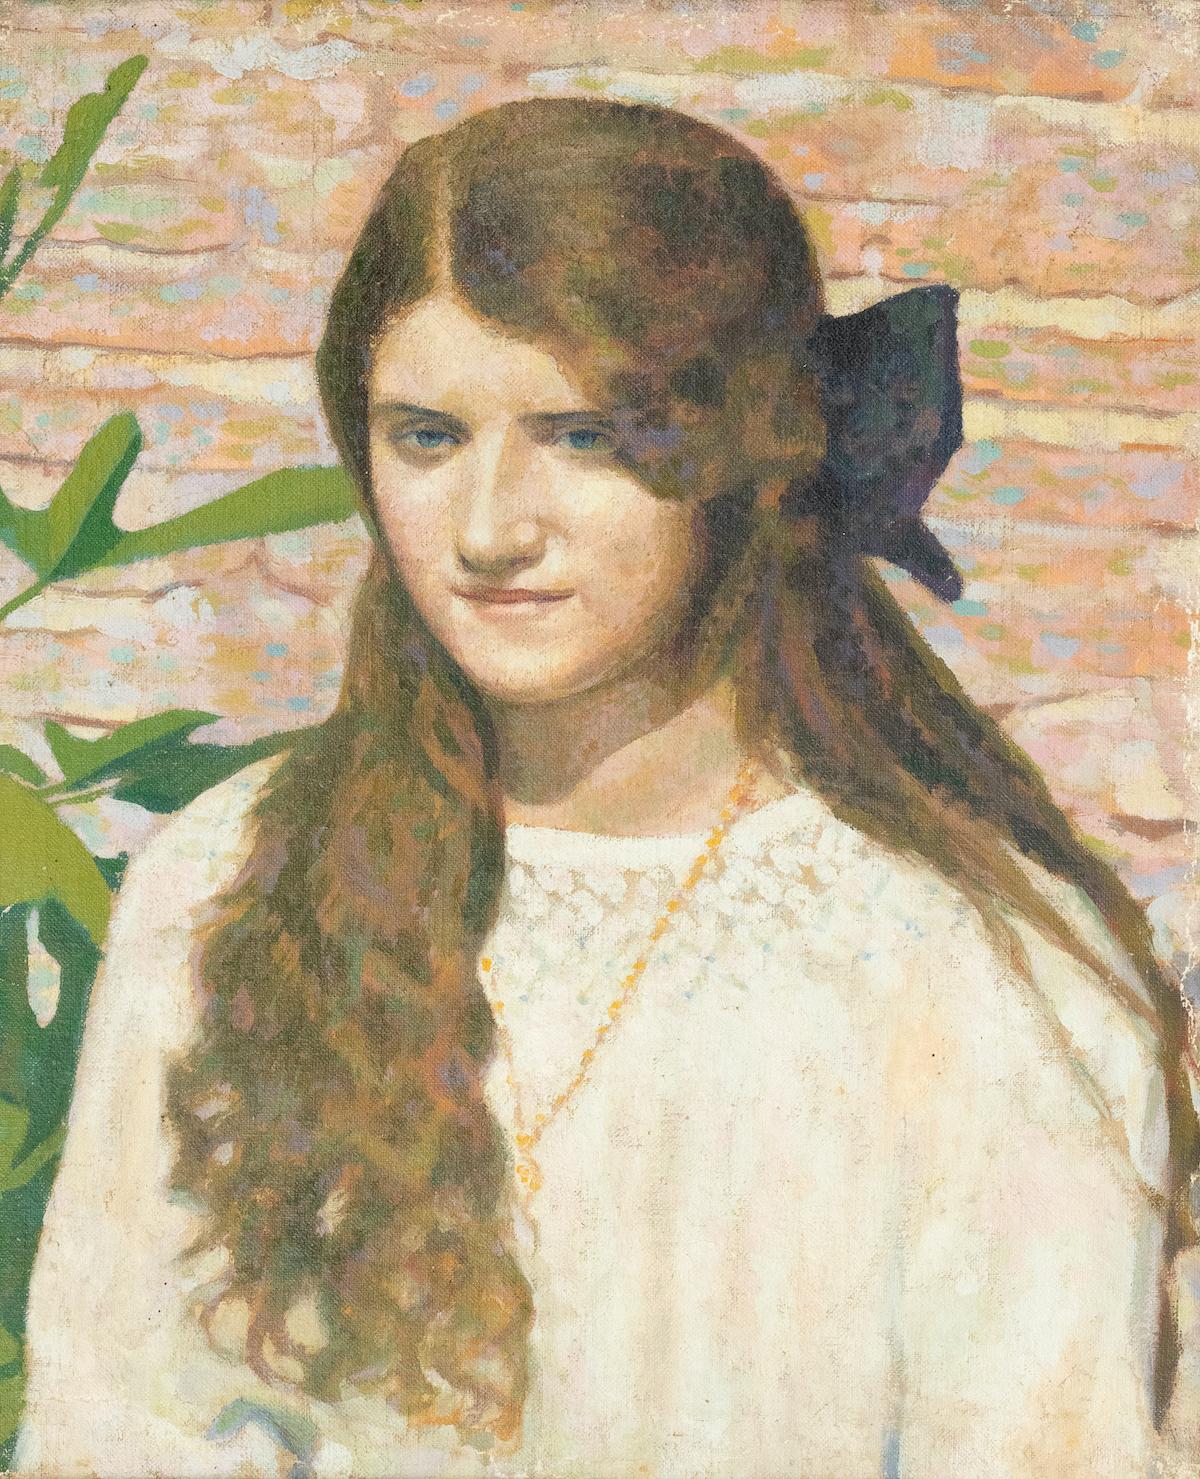 Giuseppe Galli Portrait Painting - Female Portrait - Original Oil on Canvas by G. Galli - 1924